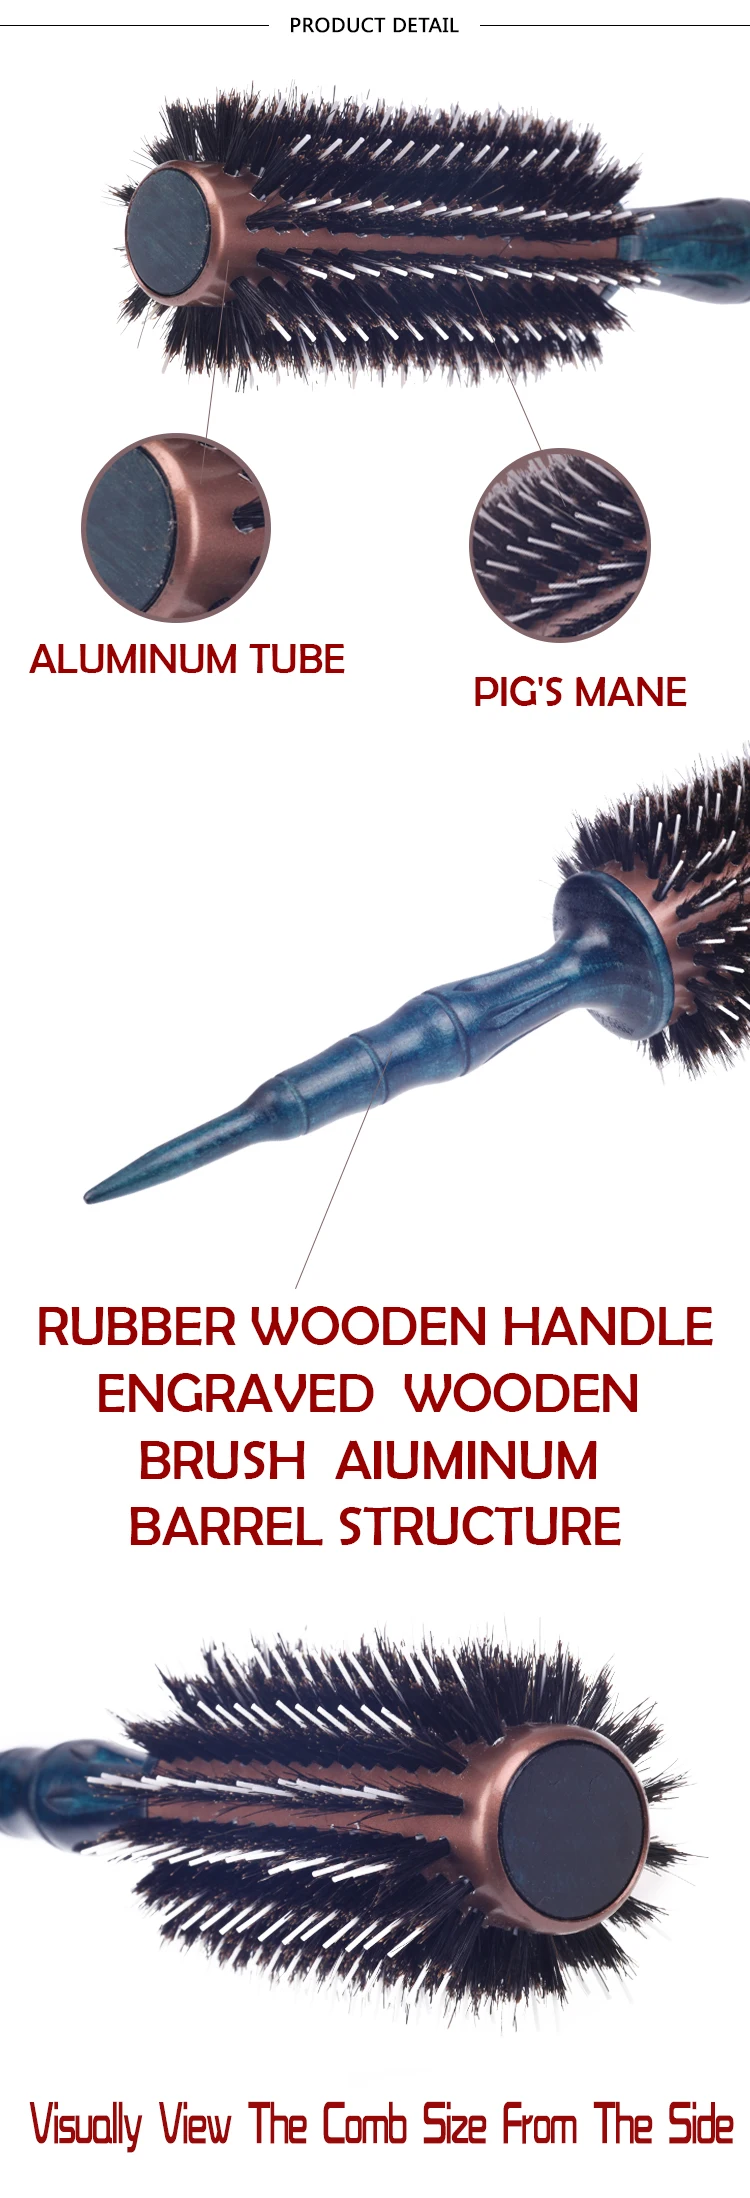 EUREKA A28025-55PA-BL Professional Aluminum Tube With Boar Bristle And Nylon Pins Hair Brush Salon Round Hair Brush